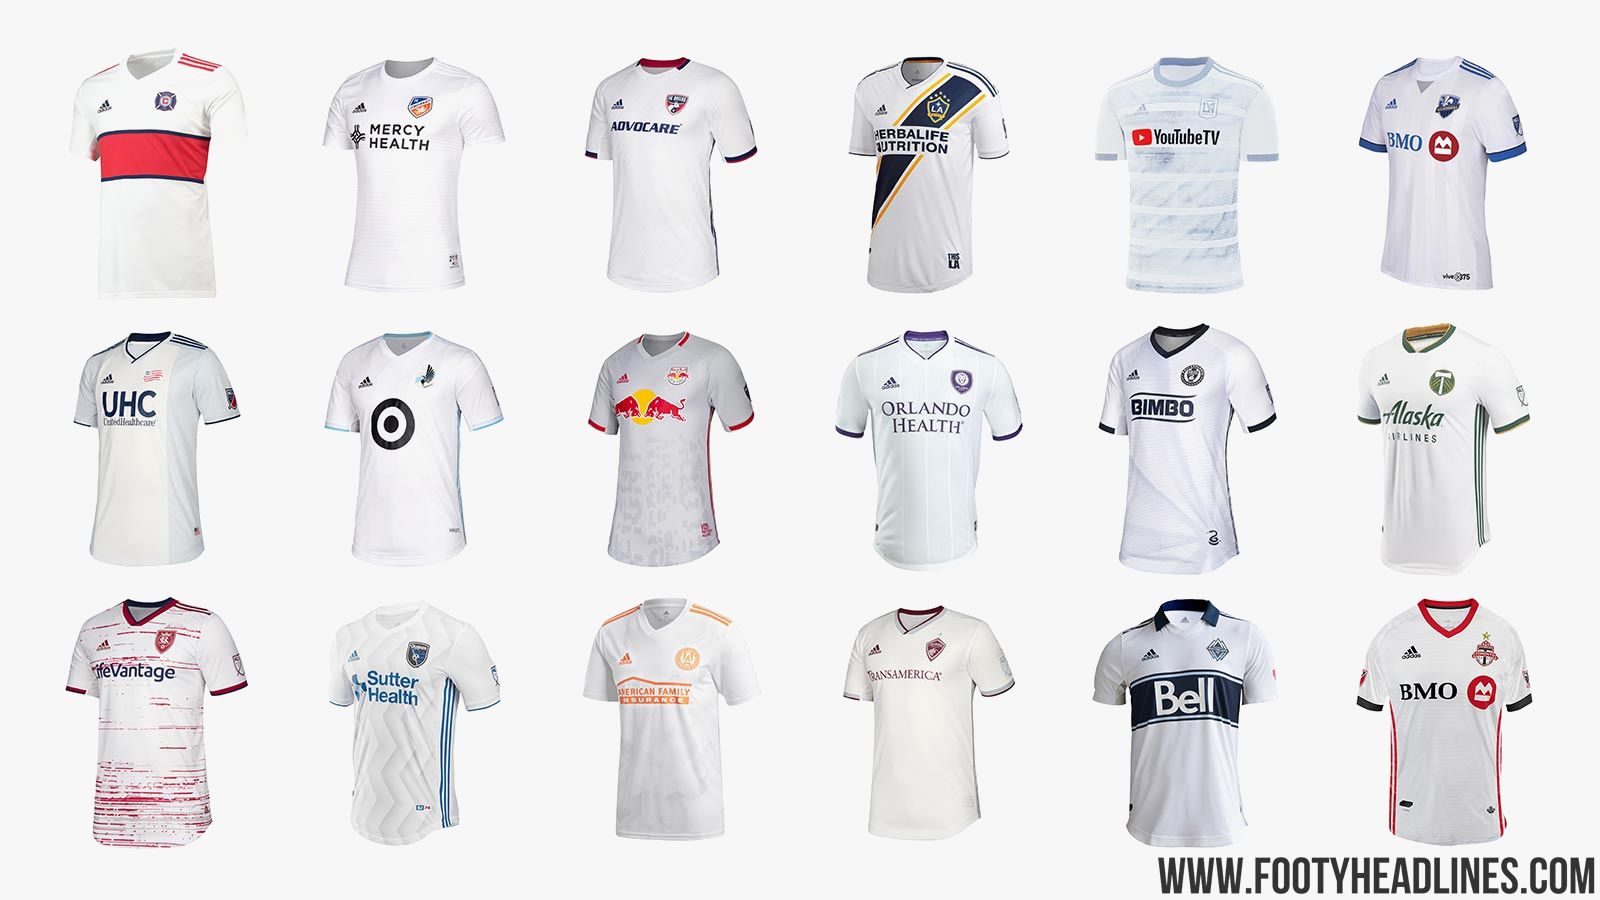 2019 MLS Kit Overview - All New MLS Jerseys - Footy Headlines